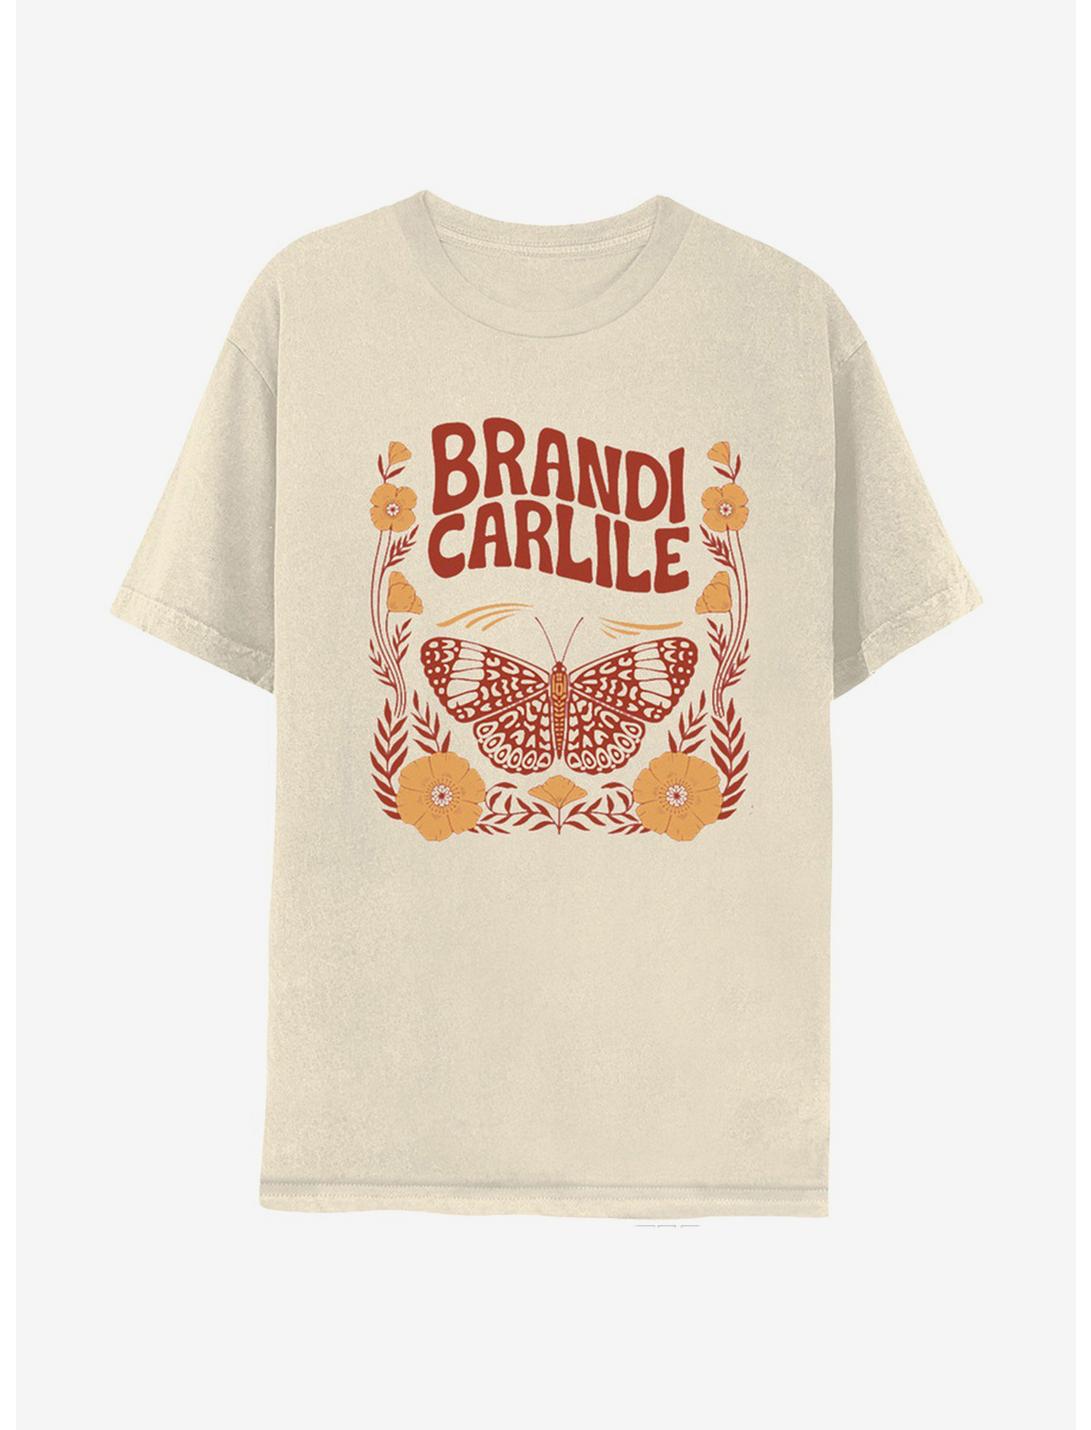 Brandi Carlile Butterfly Boyfriend Fit Girls T-Shirt, SAND, hi-res